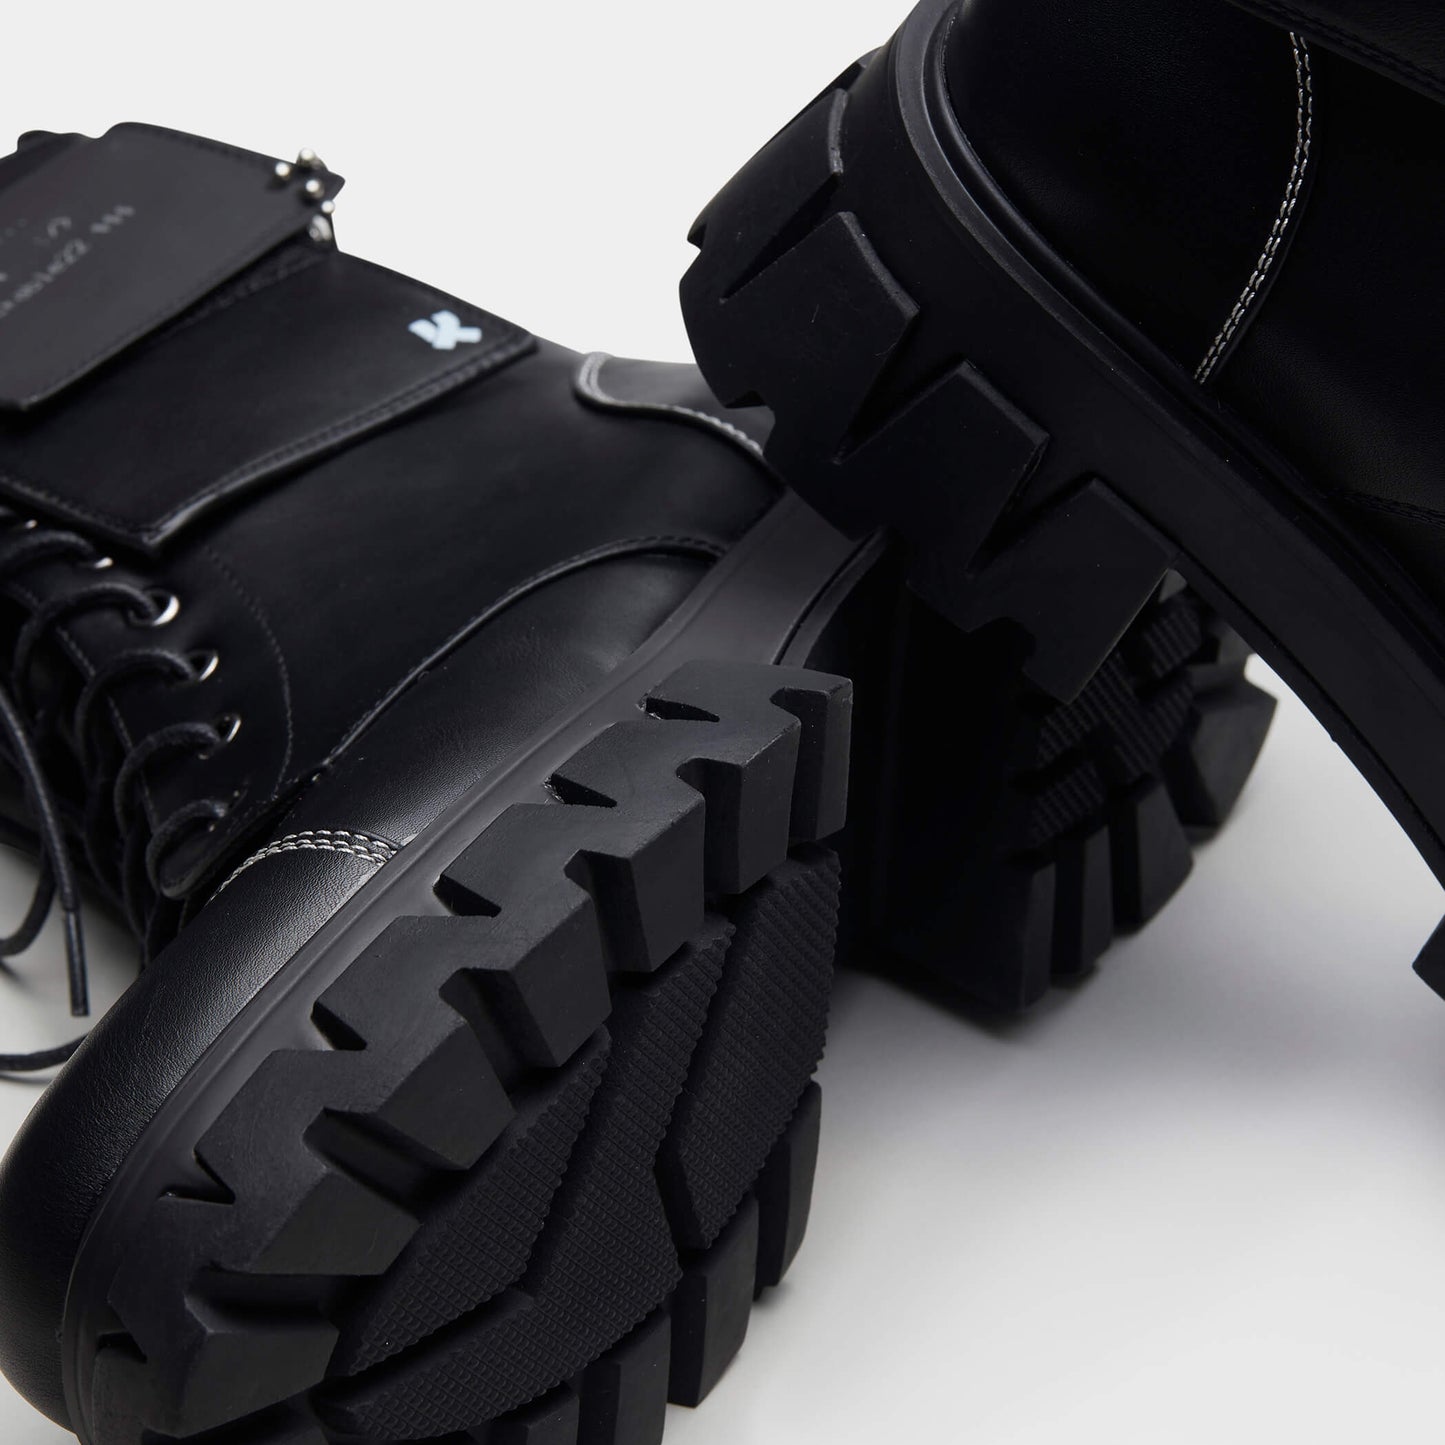 Banshee Men's Fallout Cyber Boots - Ankle Boots - KOI Footwear - Black - Sole Detail